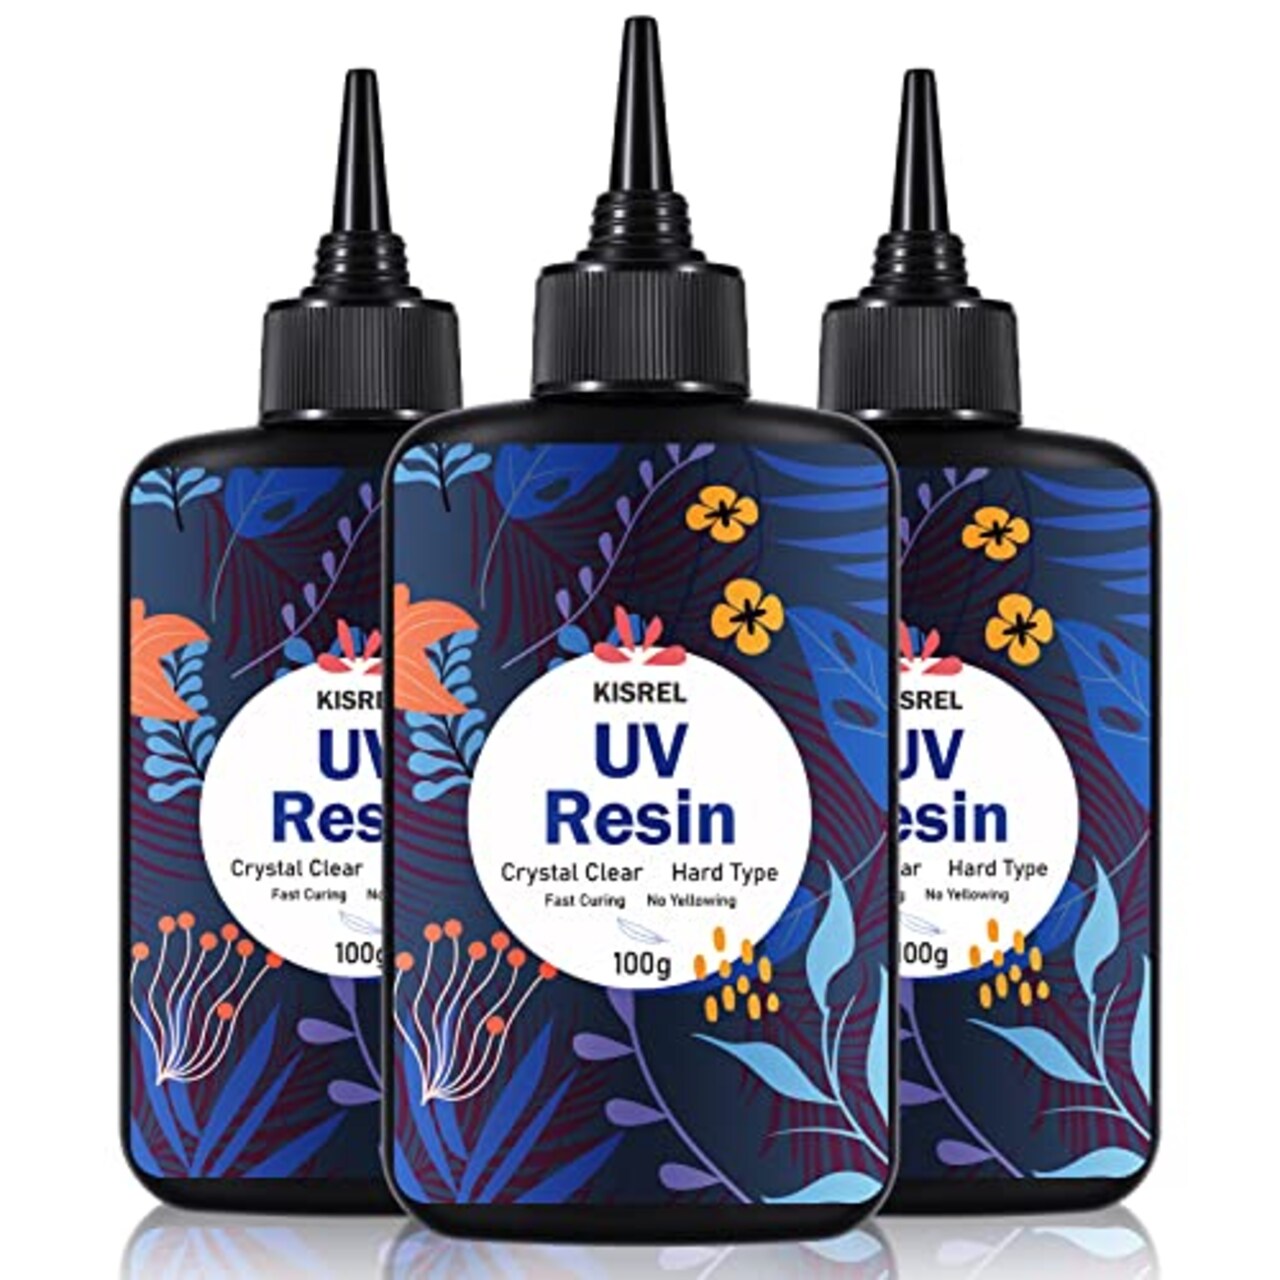 KISREL UV Resin 300g - Upgraded UV Resin Kit, Hard Type Crystal